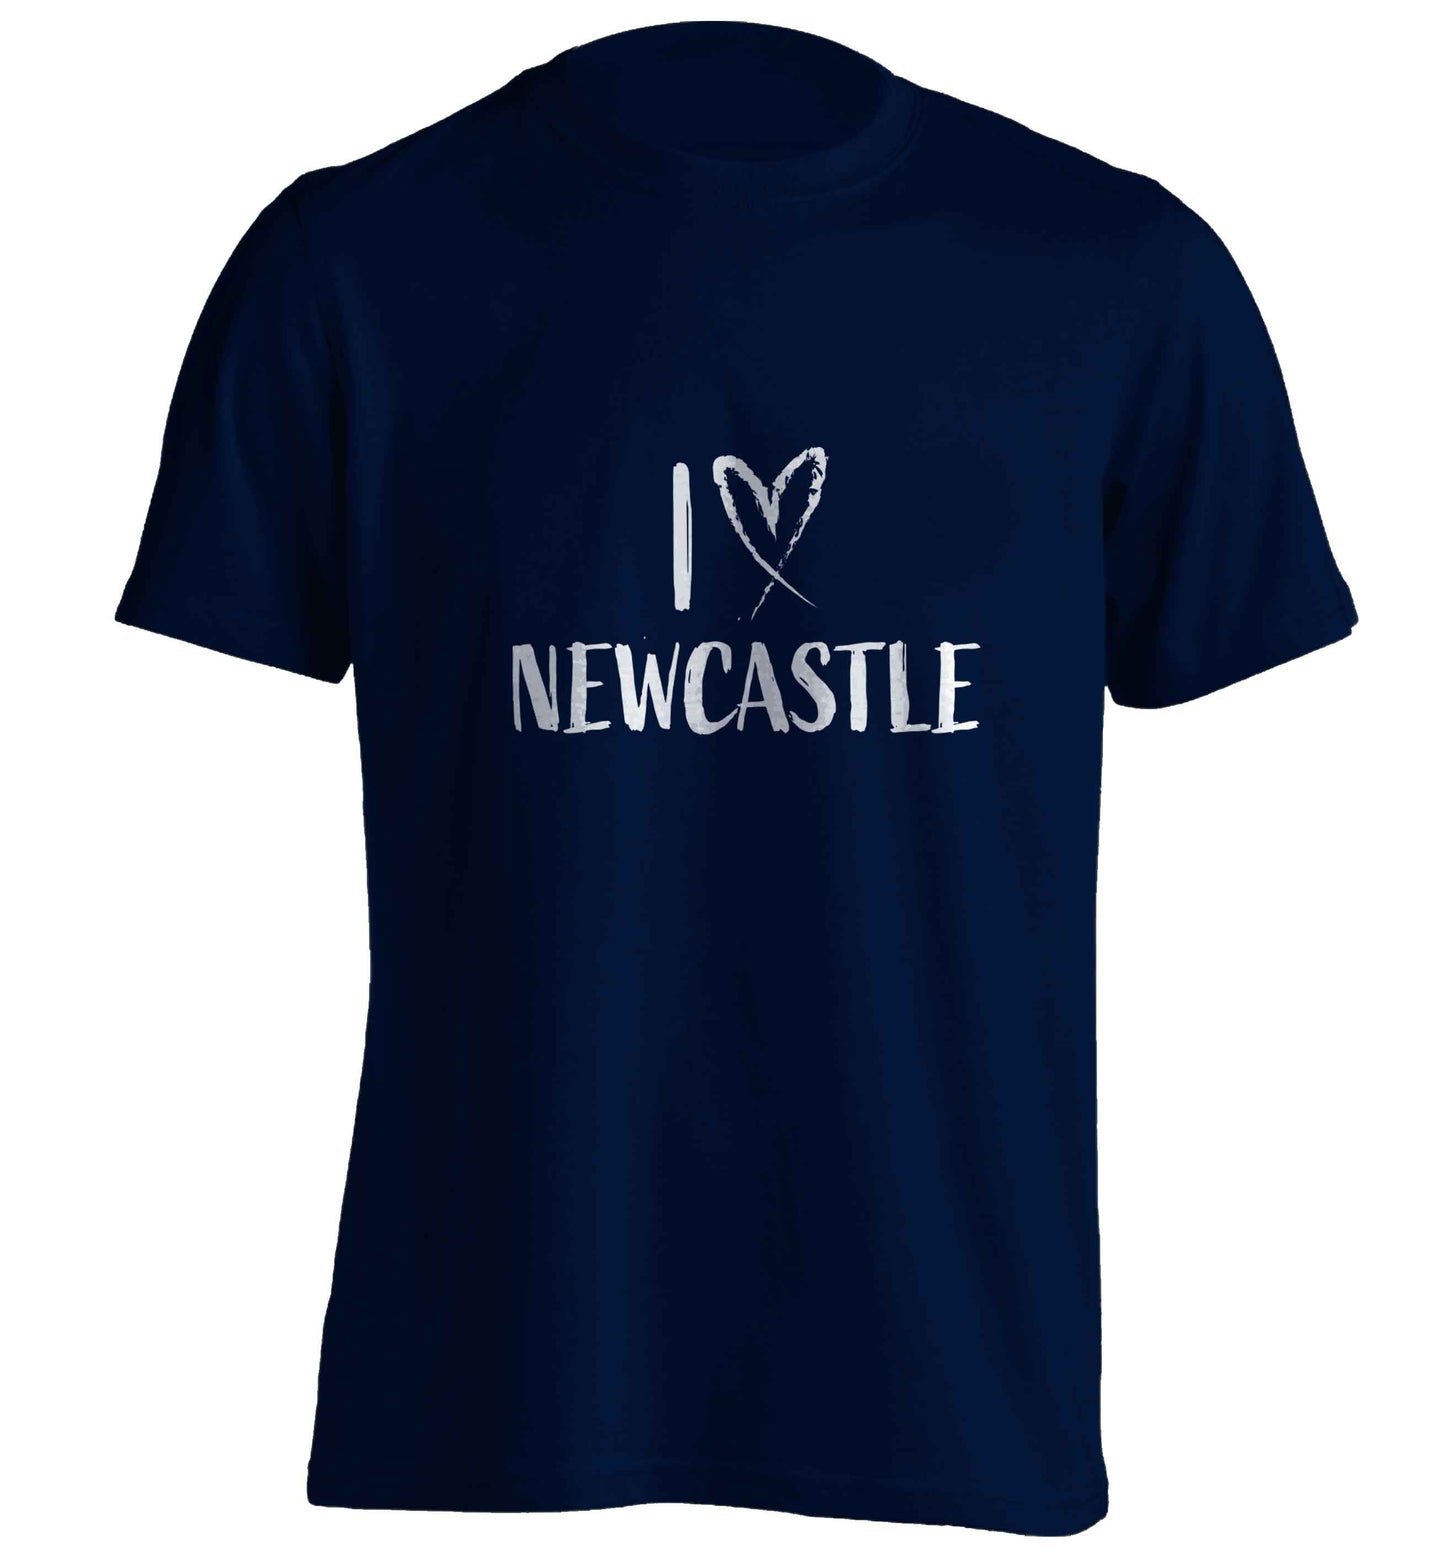 I love Newcastle adults unisex navy Tshirt 2XL